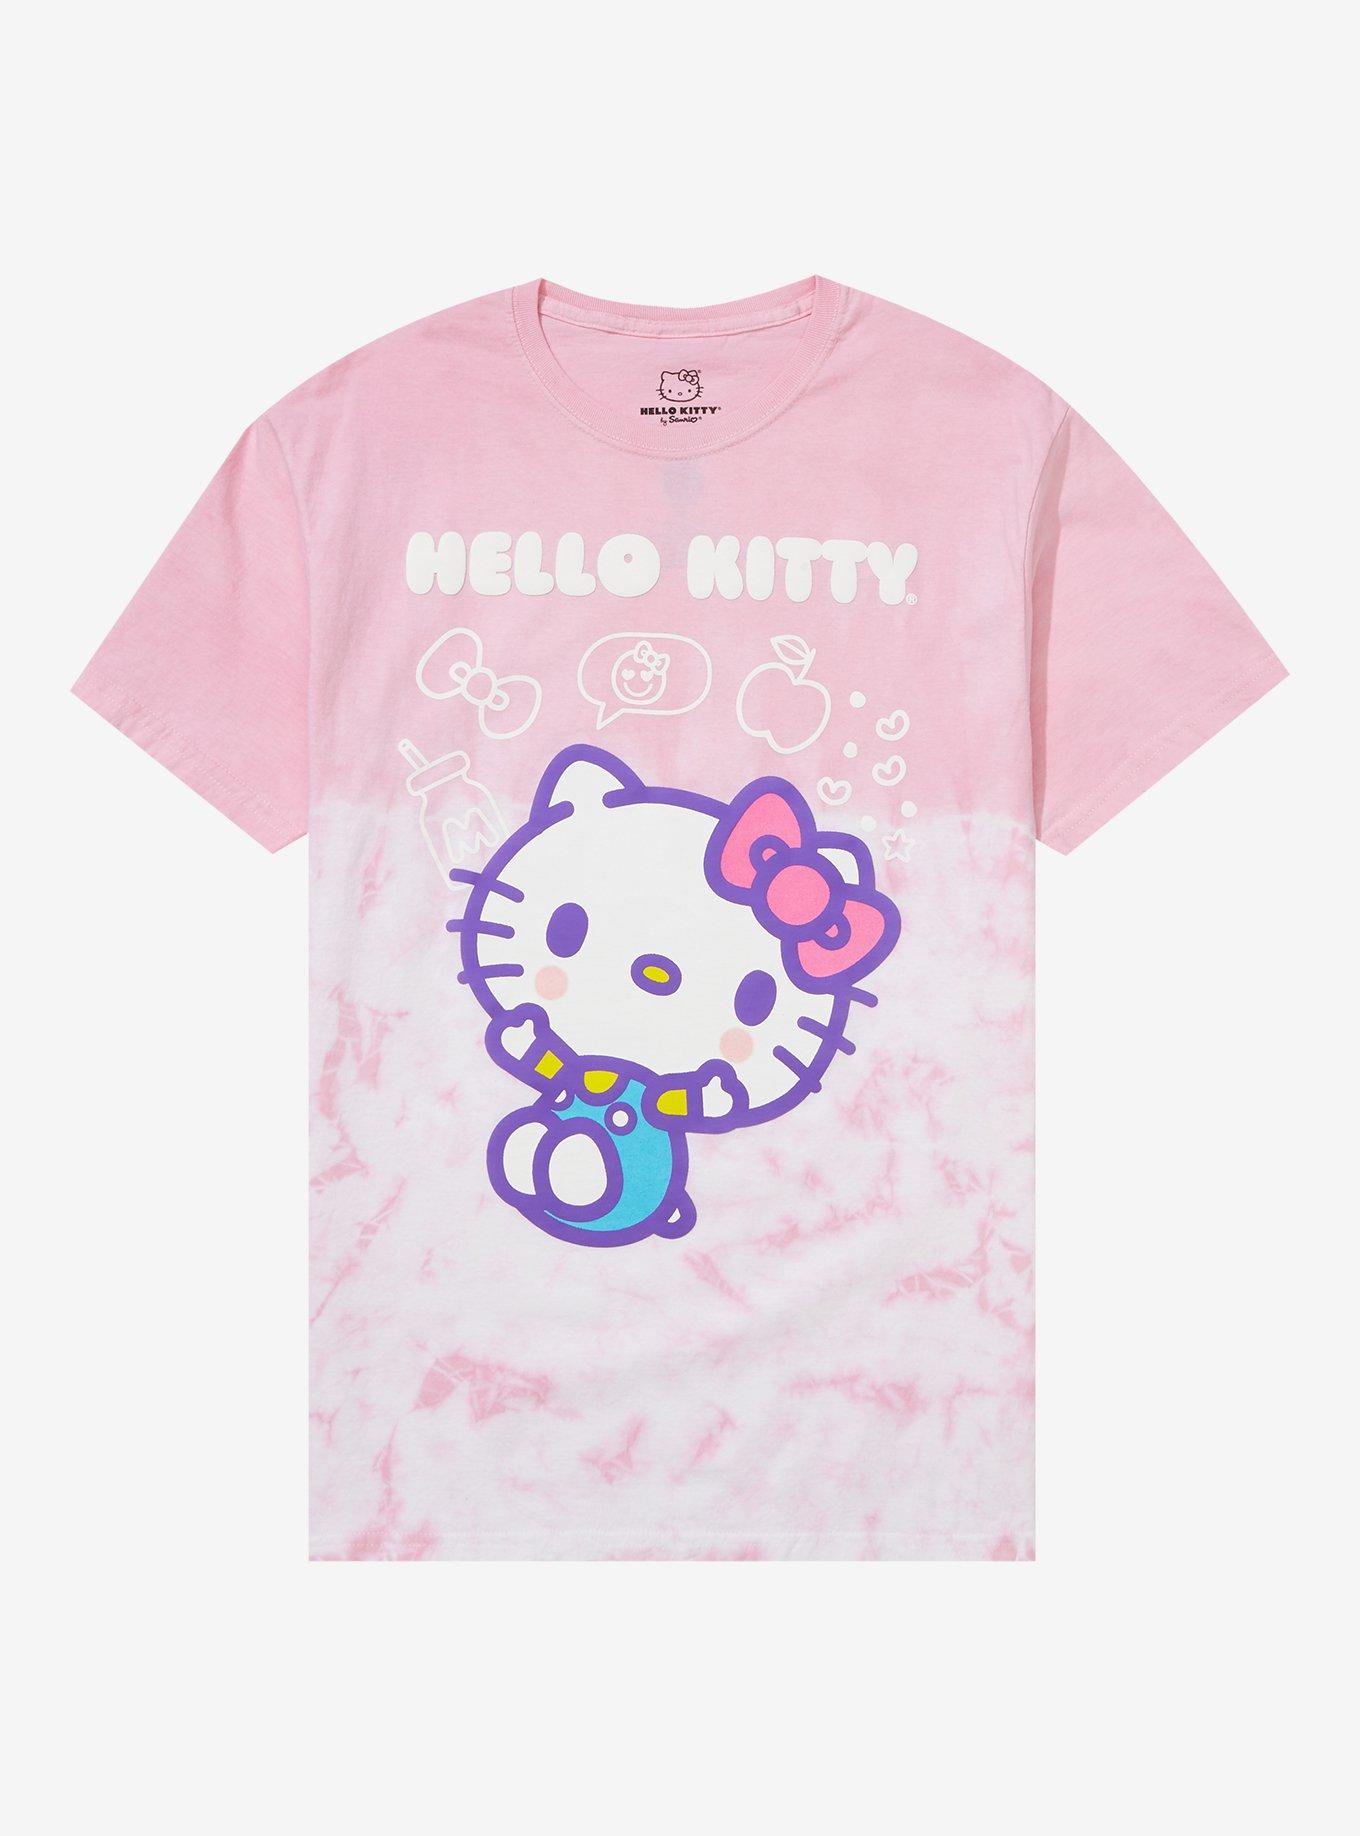 Hello Kitty Chibi Tie-Dye Boyfriend Fit Girls T-Shirt